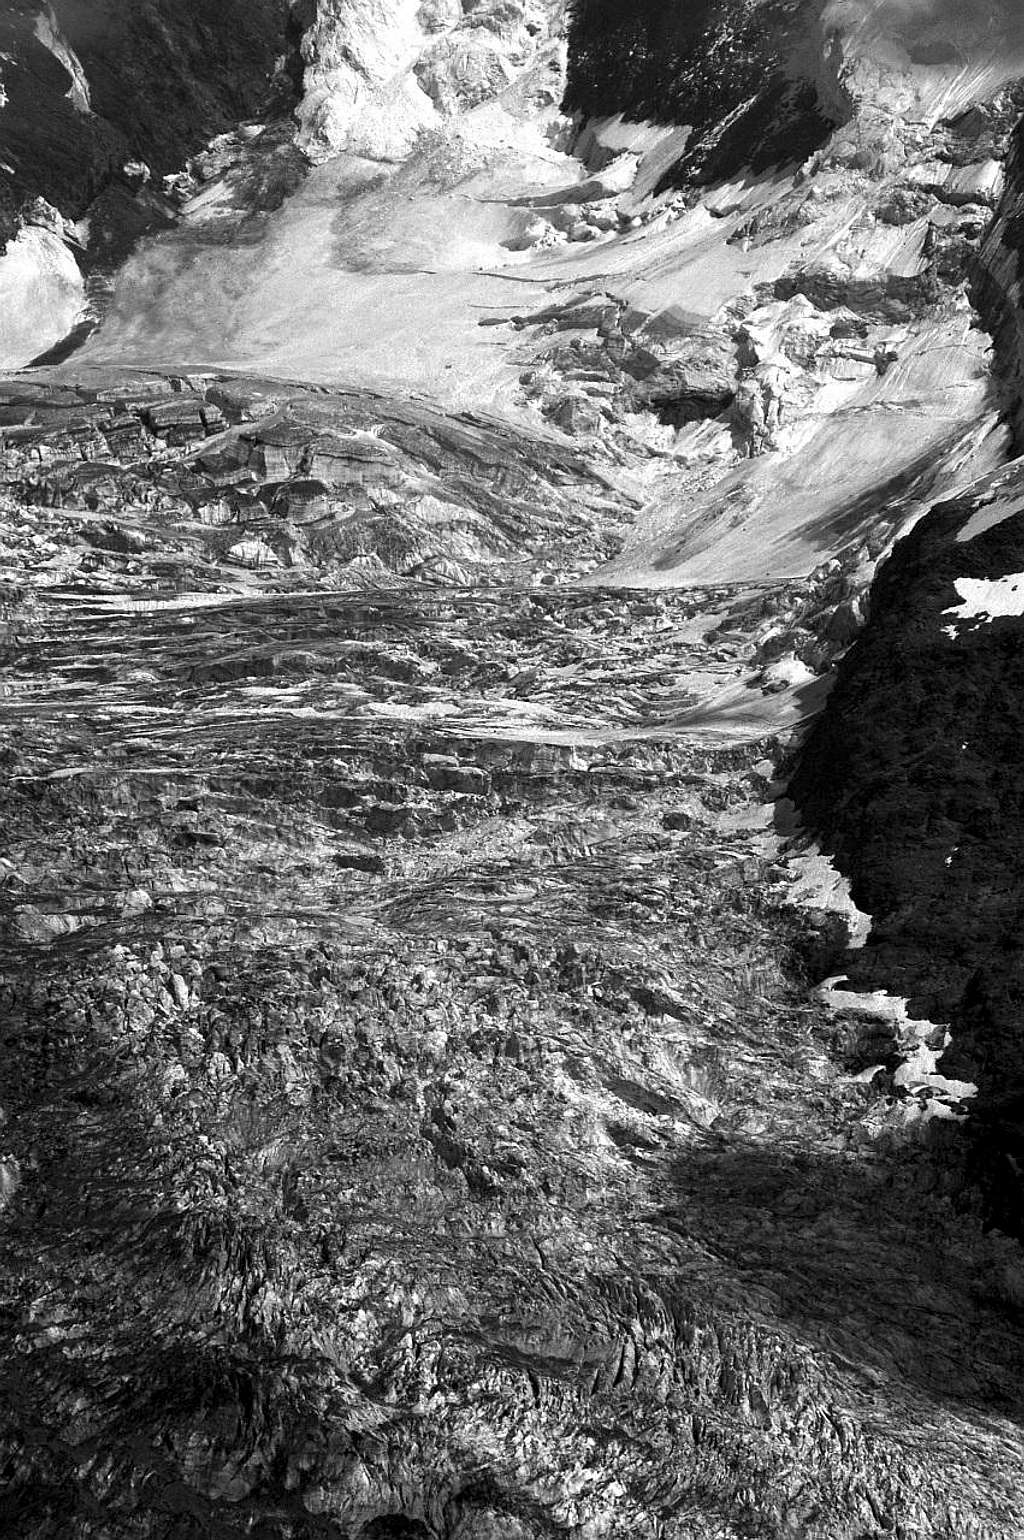 Bionnassay Glacier